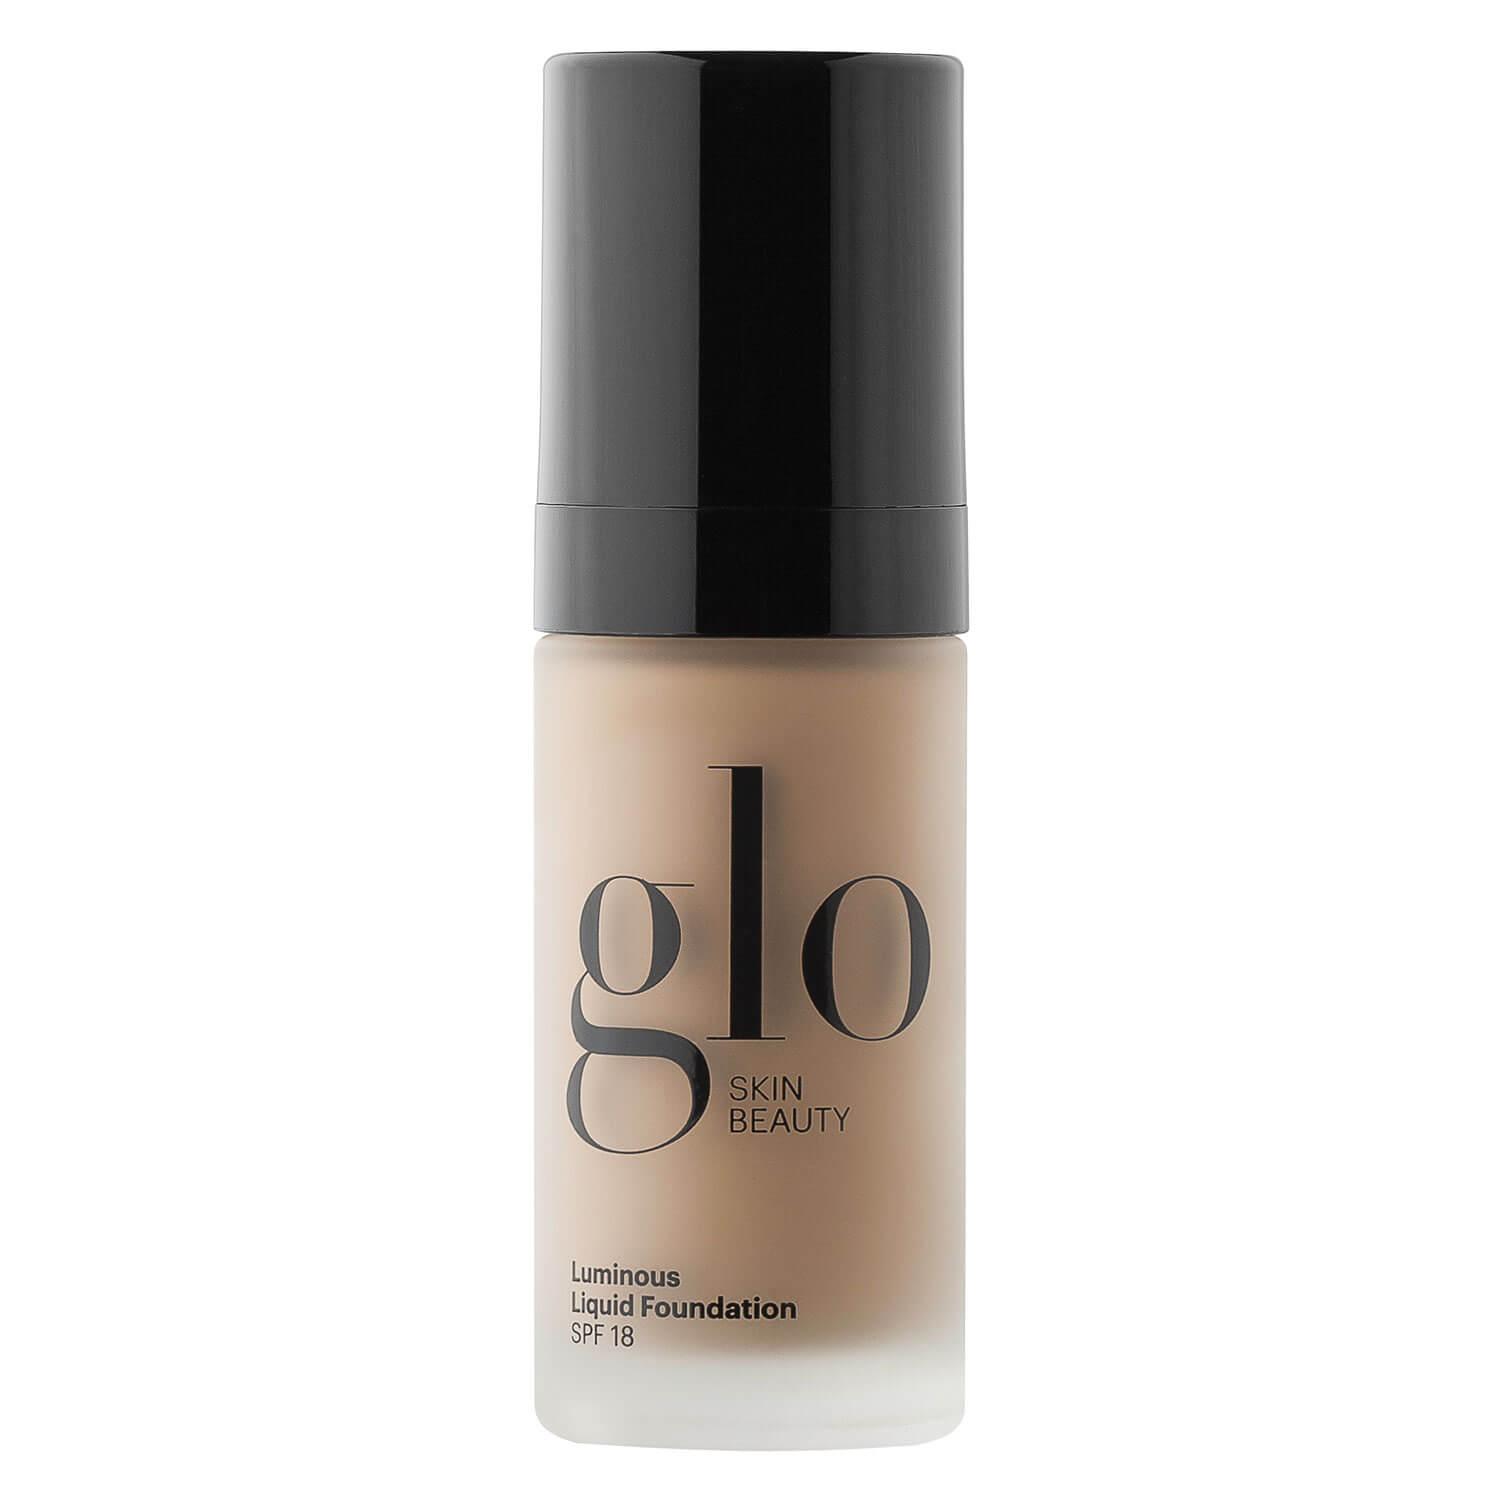 Glo Skin Beauty Foundation - Luminous Liquid Foundation Almond SPF 18